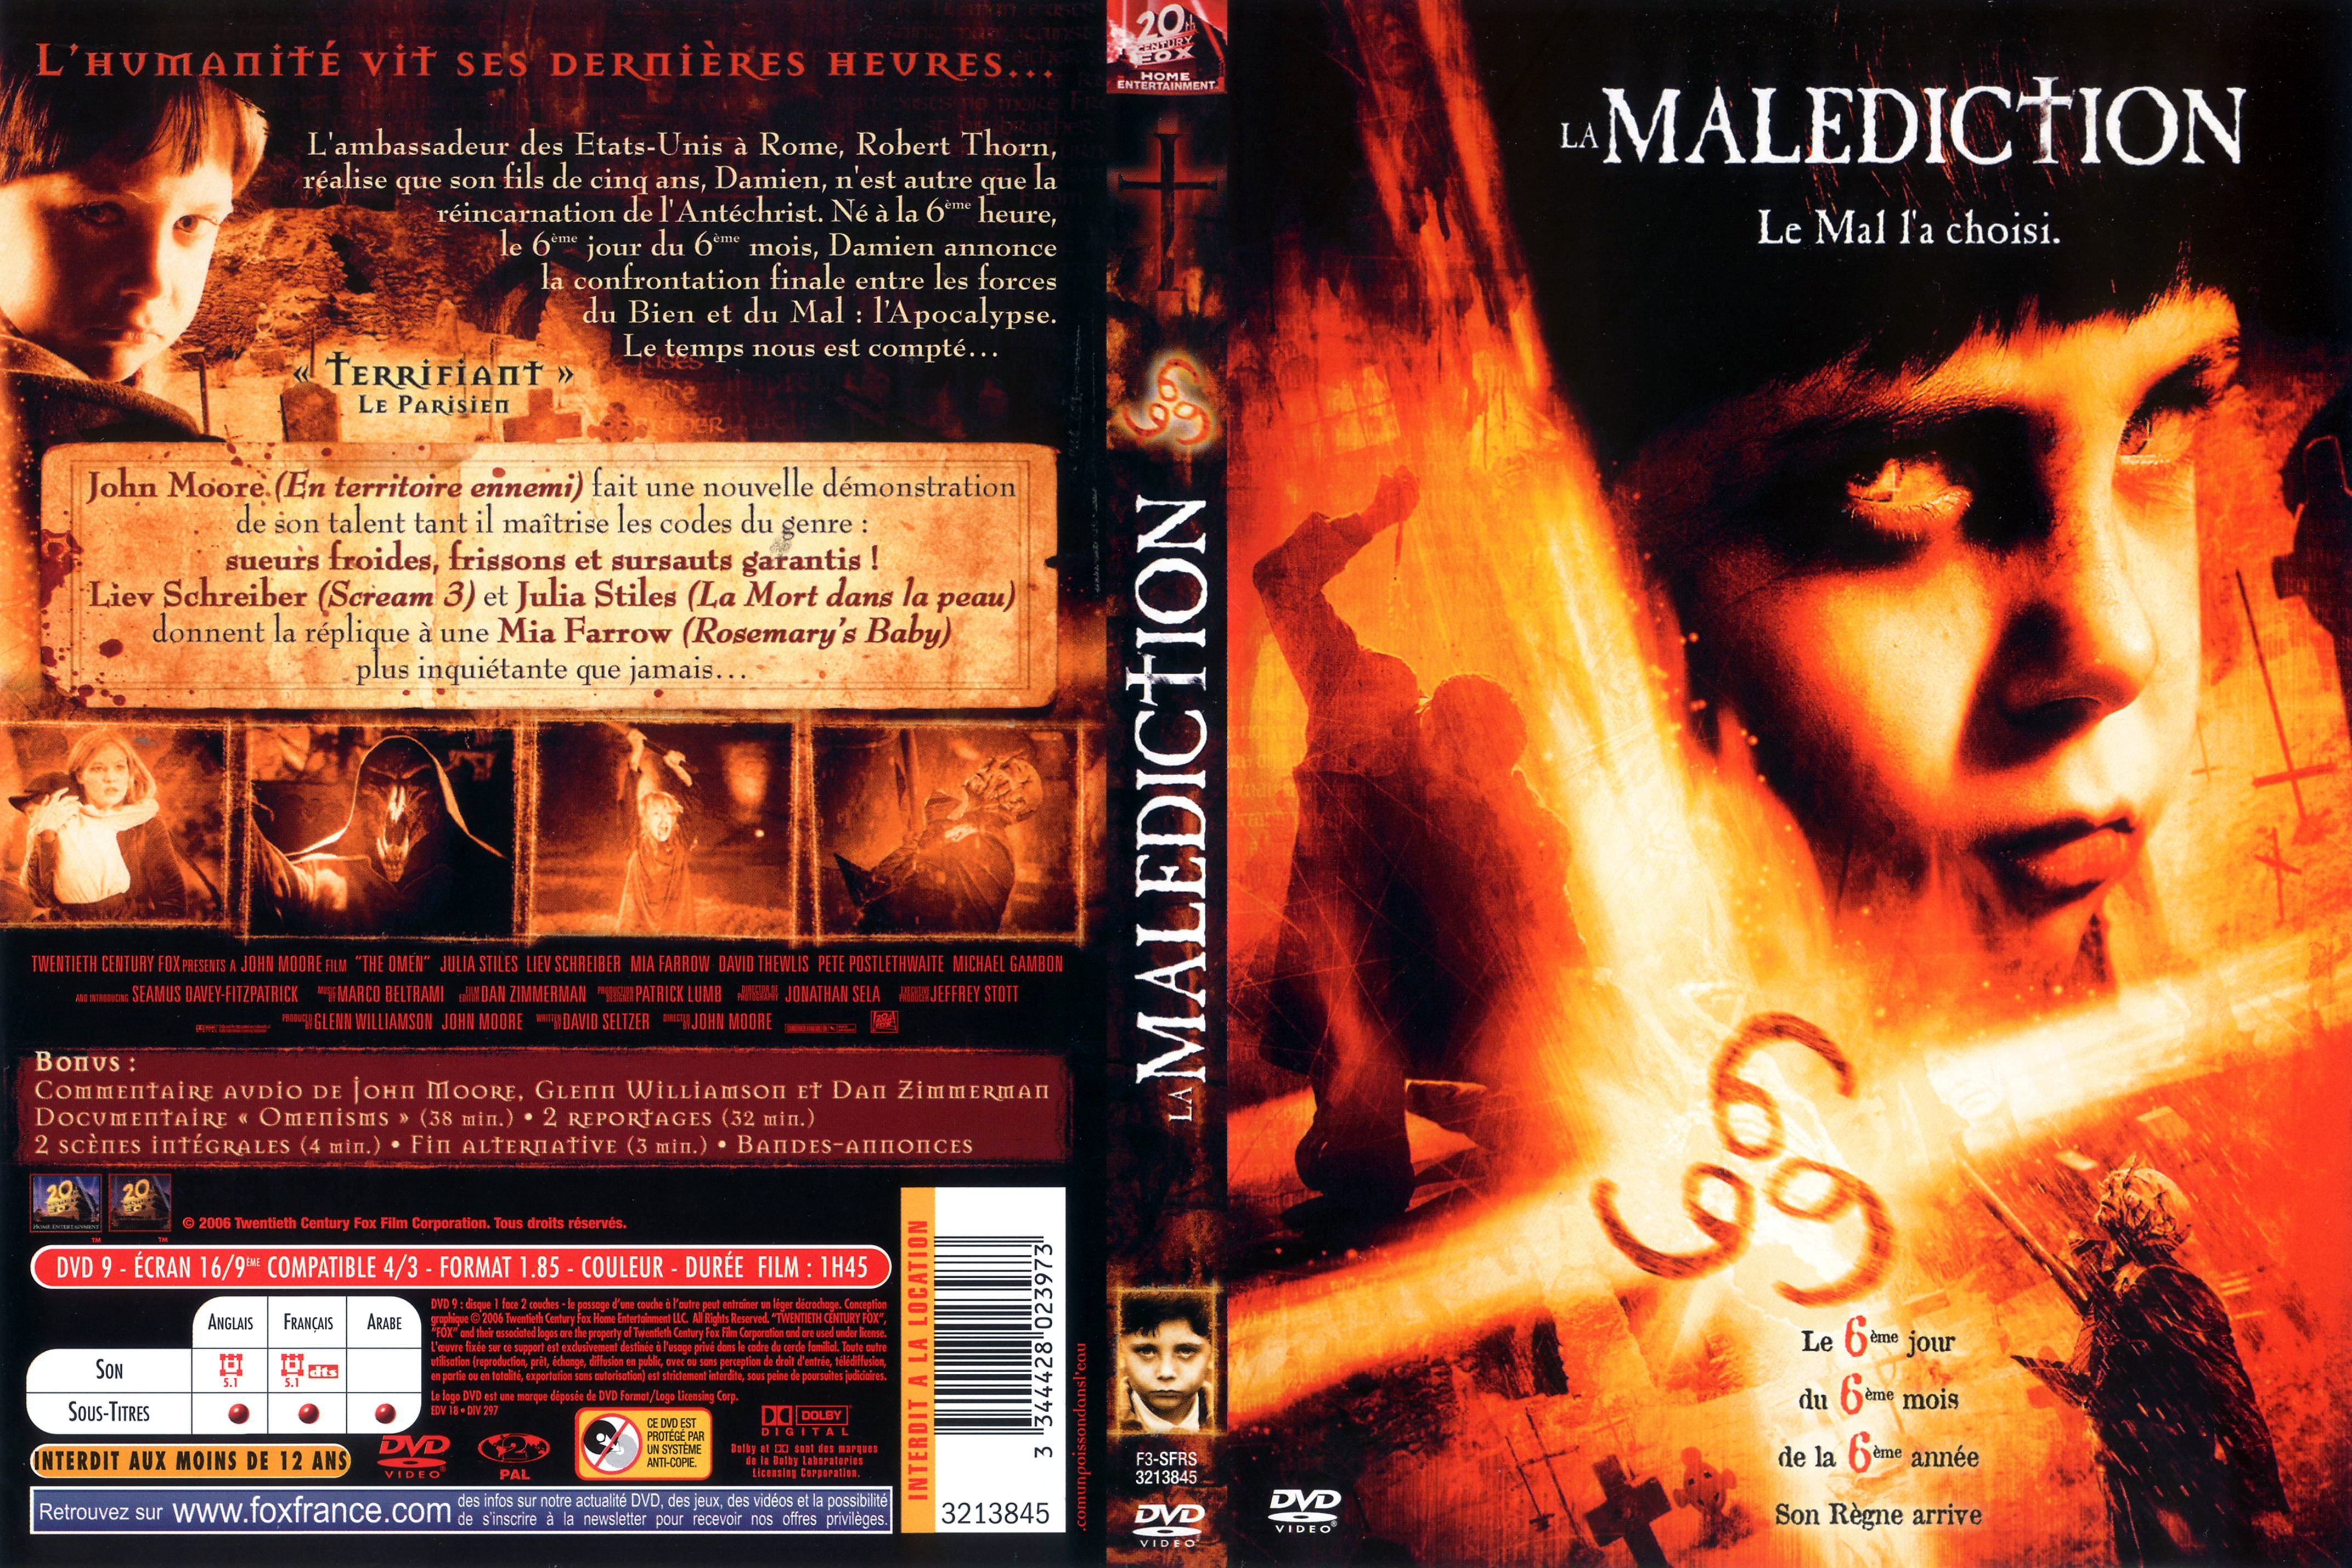 Jaquette DVD La malediction (2006) v2